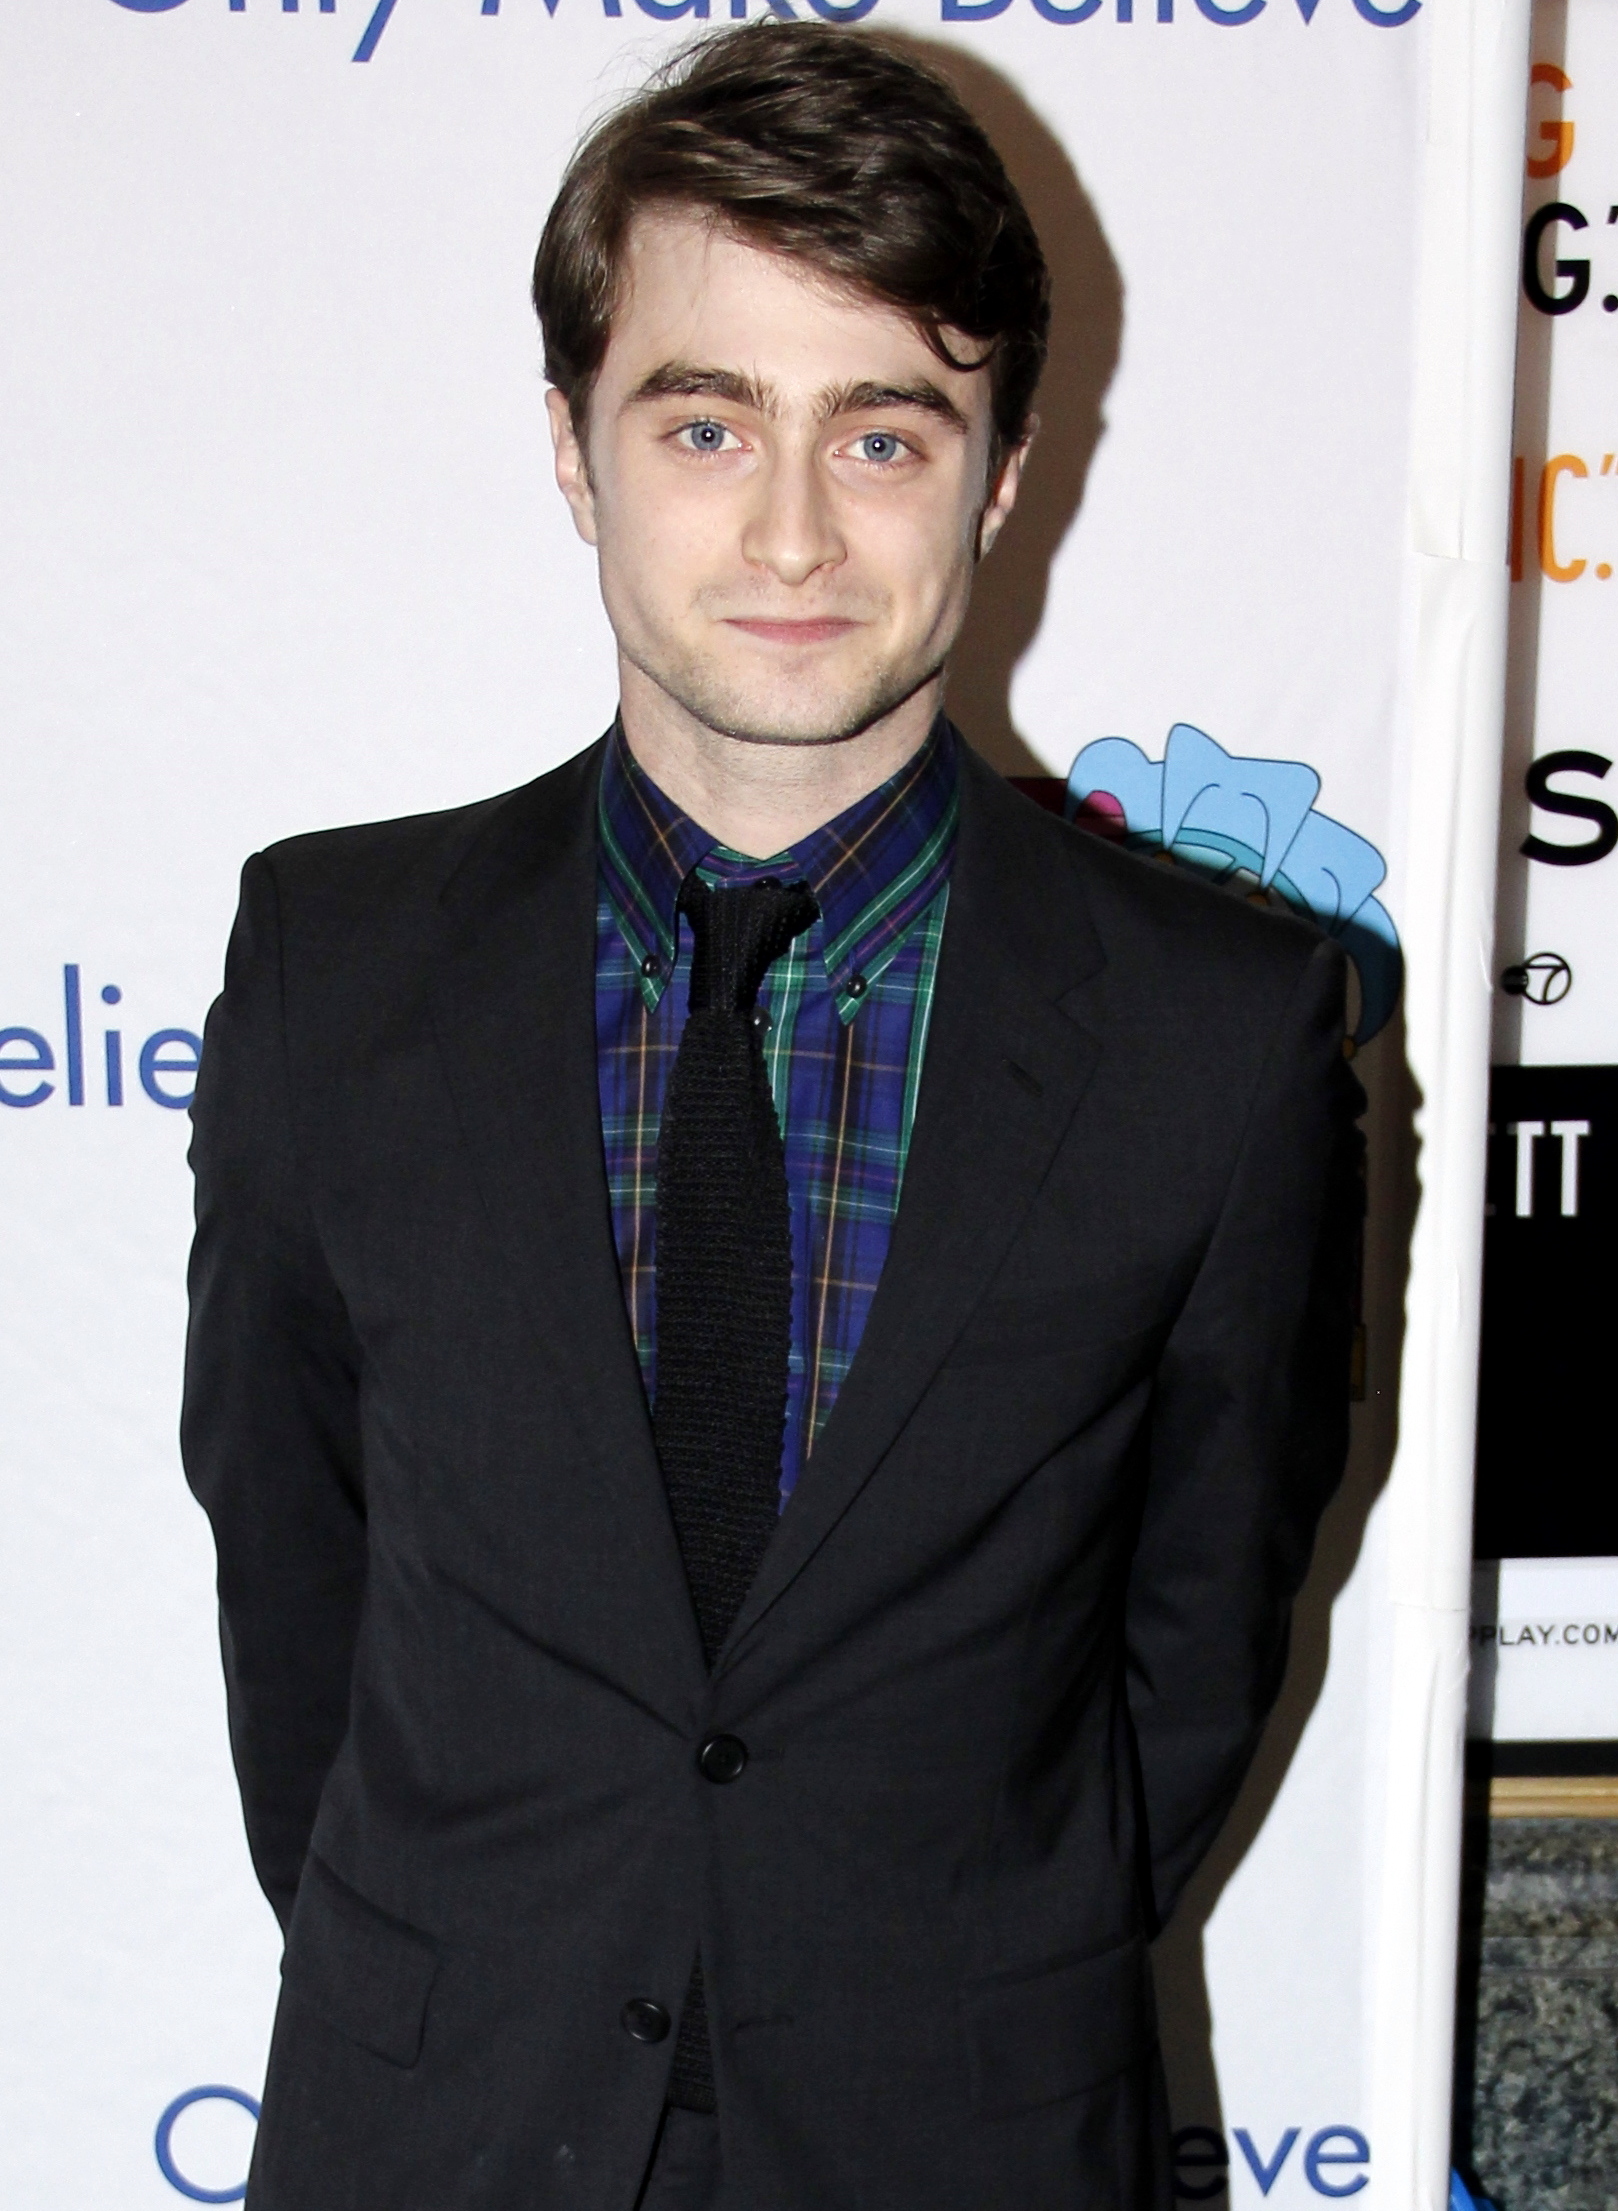 Daniel Radcliffe photo #102525, Daniel Radcliffe image